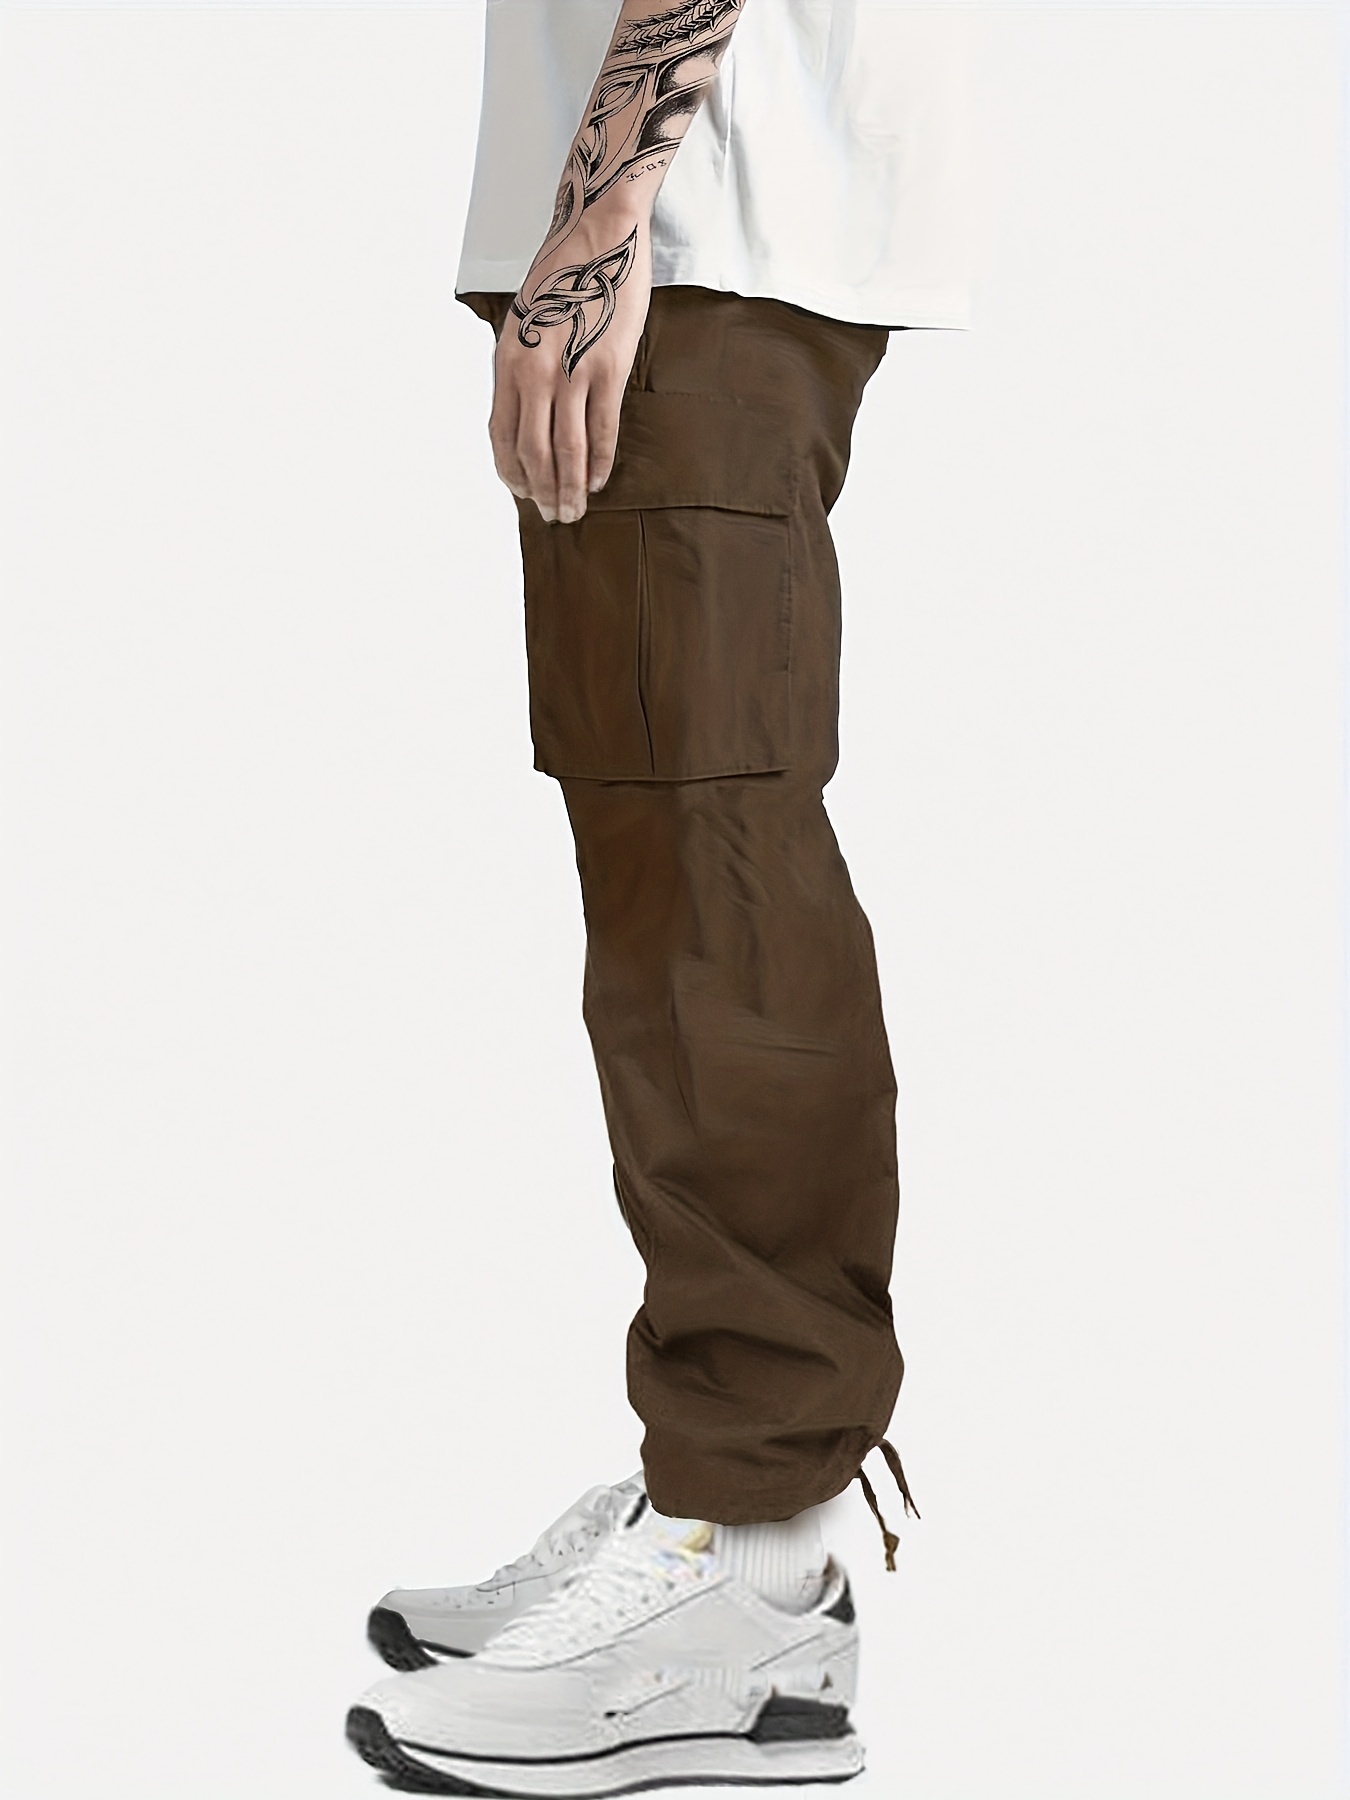 Hndudnff Men's Cargo Pants Loose Straight Multi Pocket Pants Solid